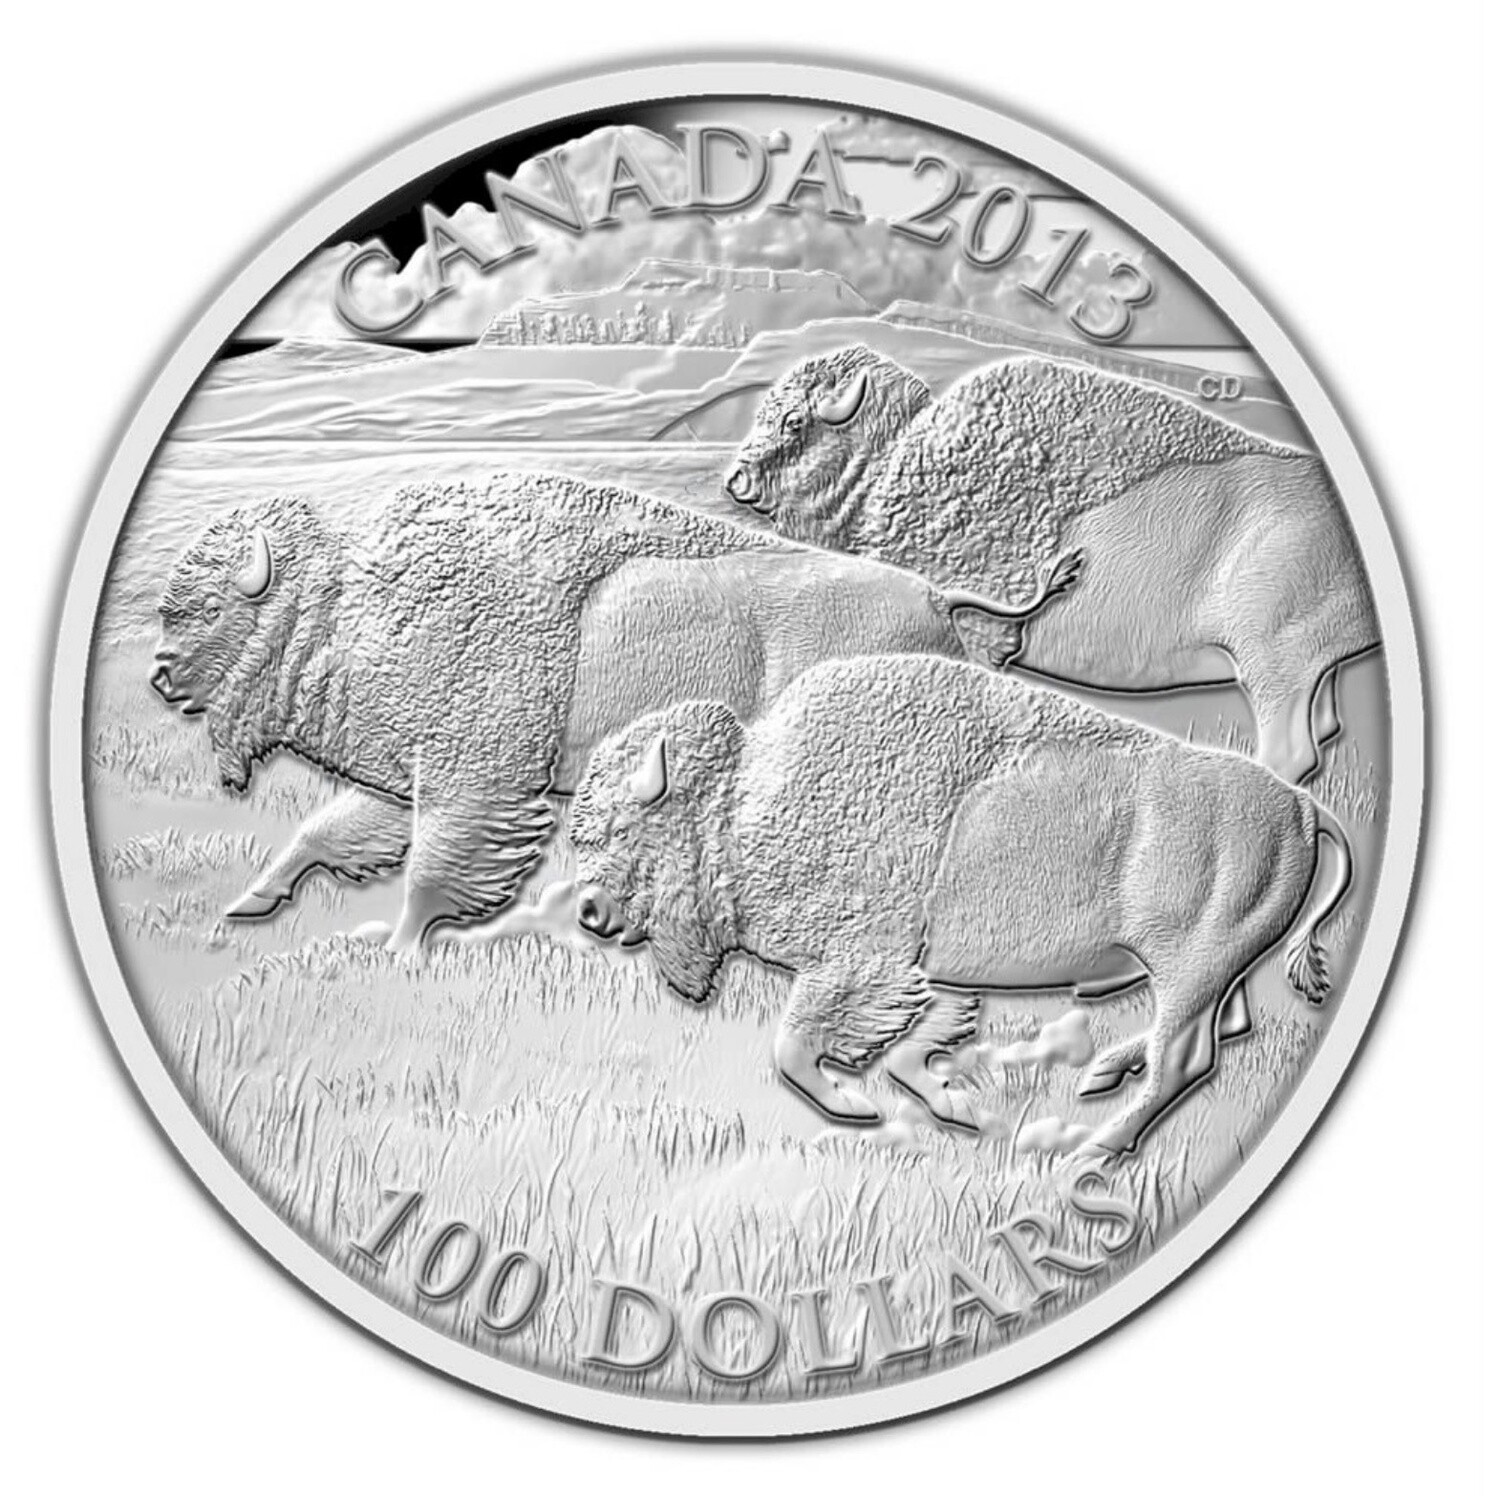 2013 CANADA $100 FINE SILVER COIN - BISON STAMPEDE